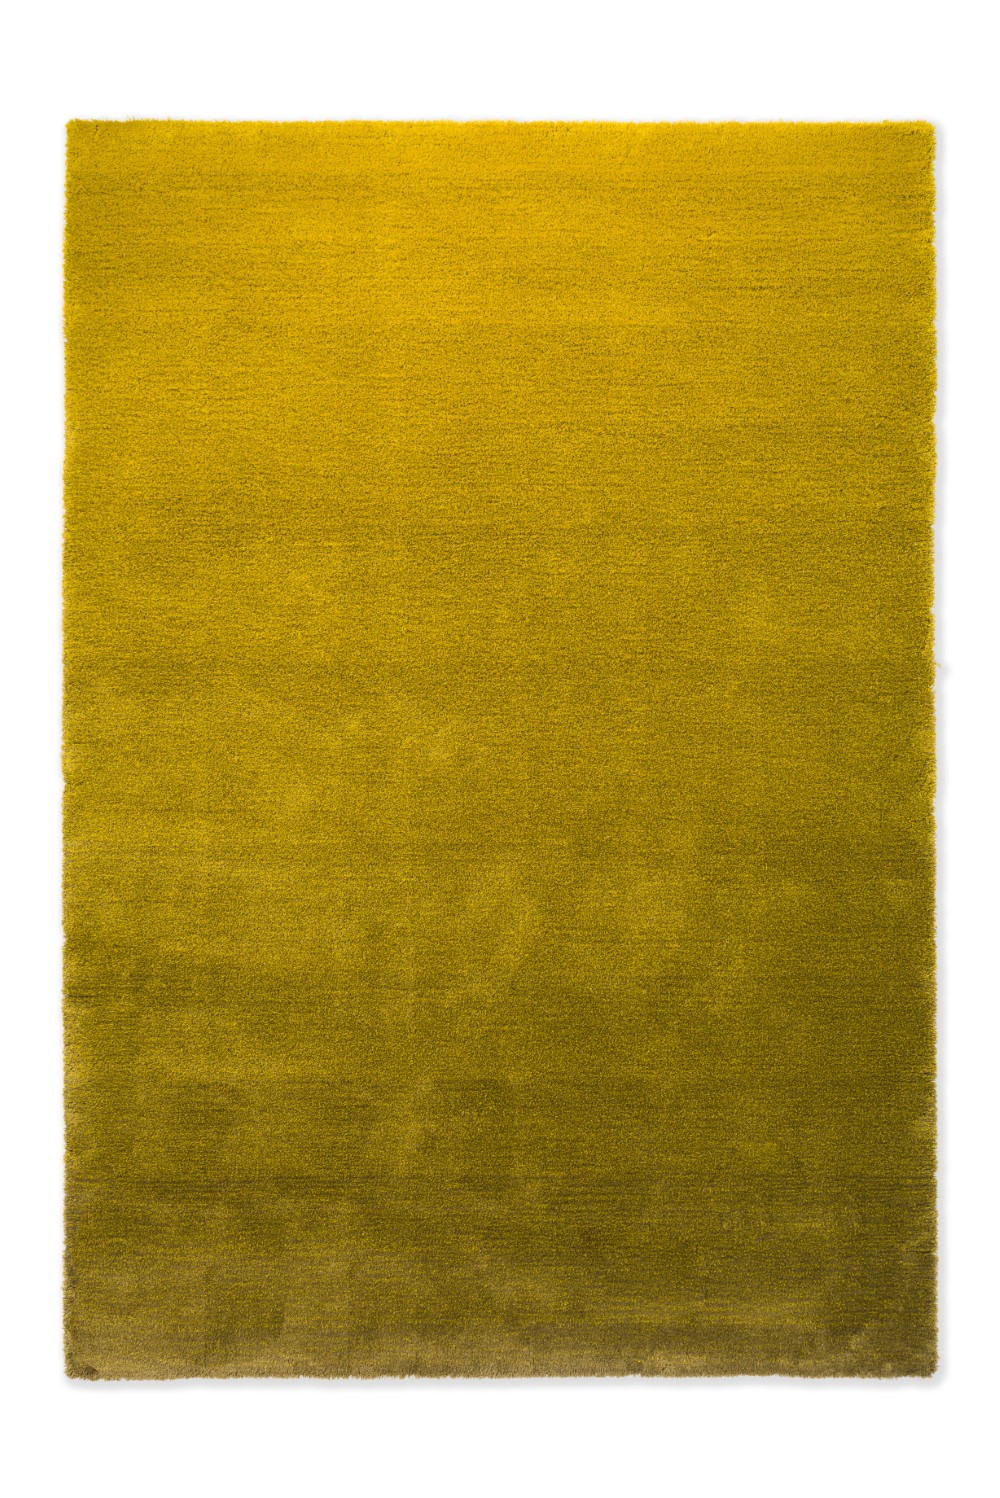 brink-campman-rug-shade-low-lemon-gold-010106